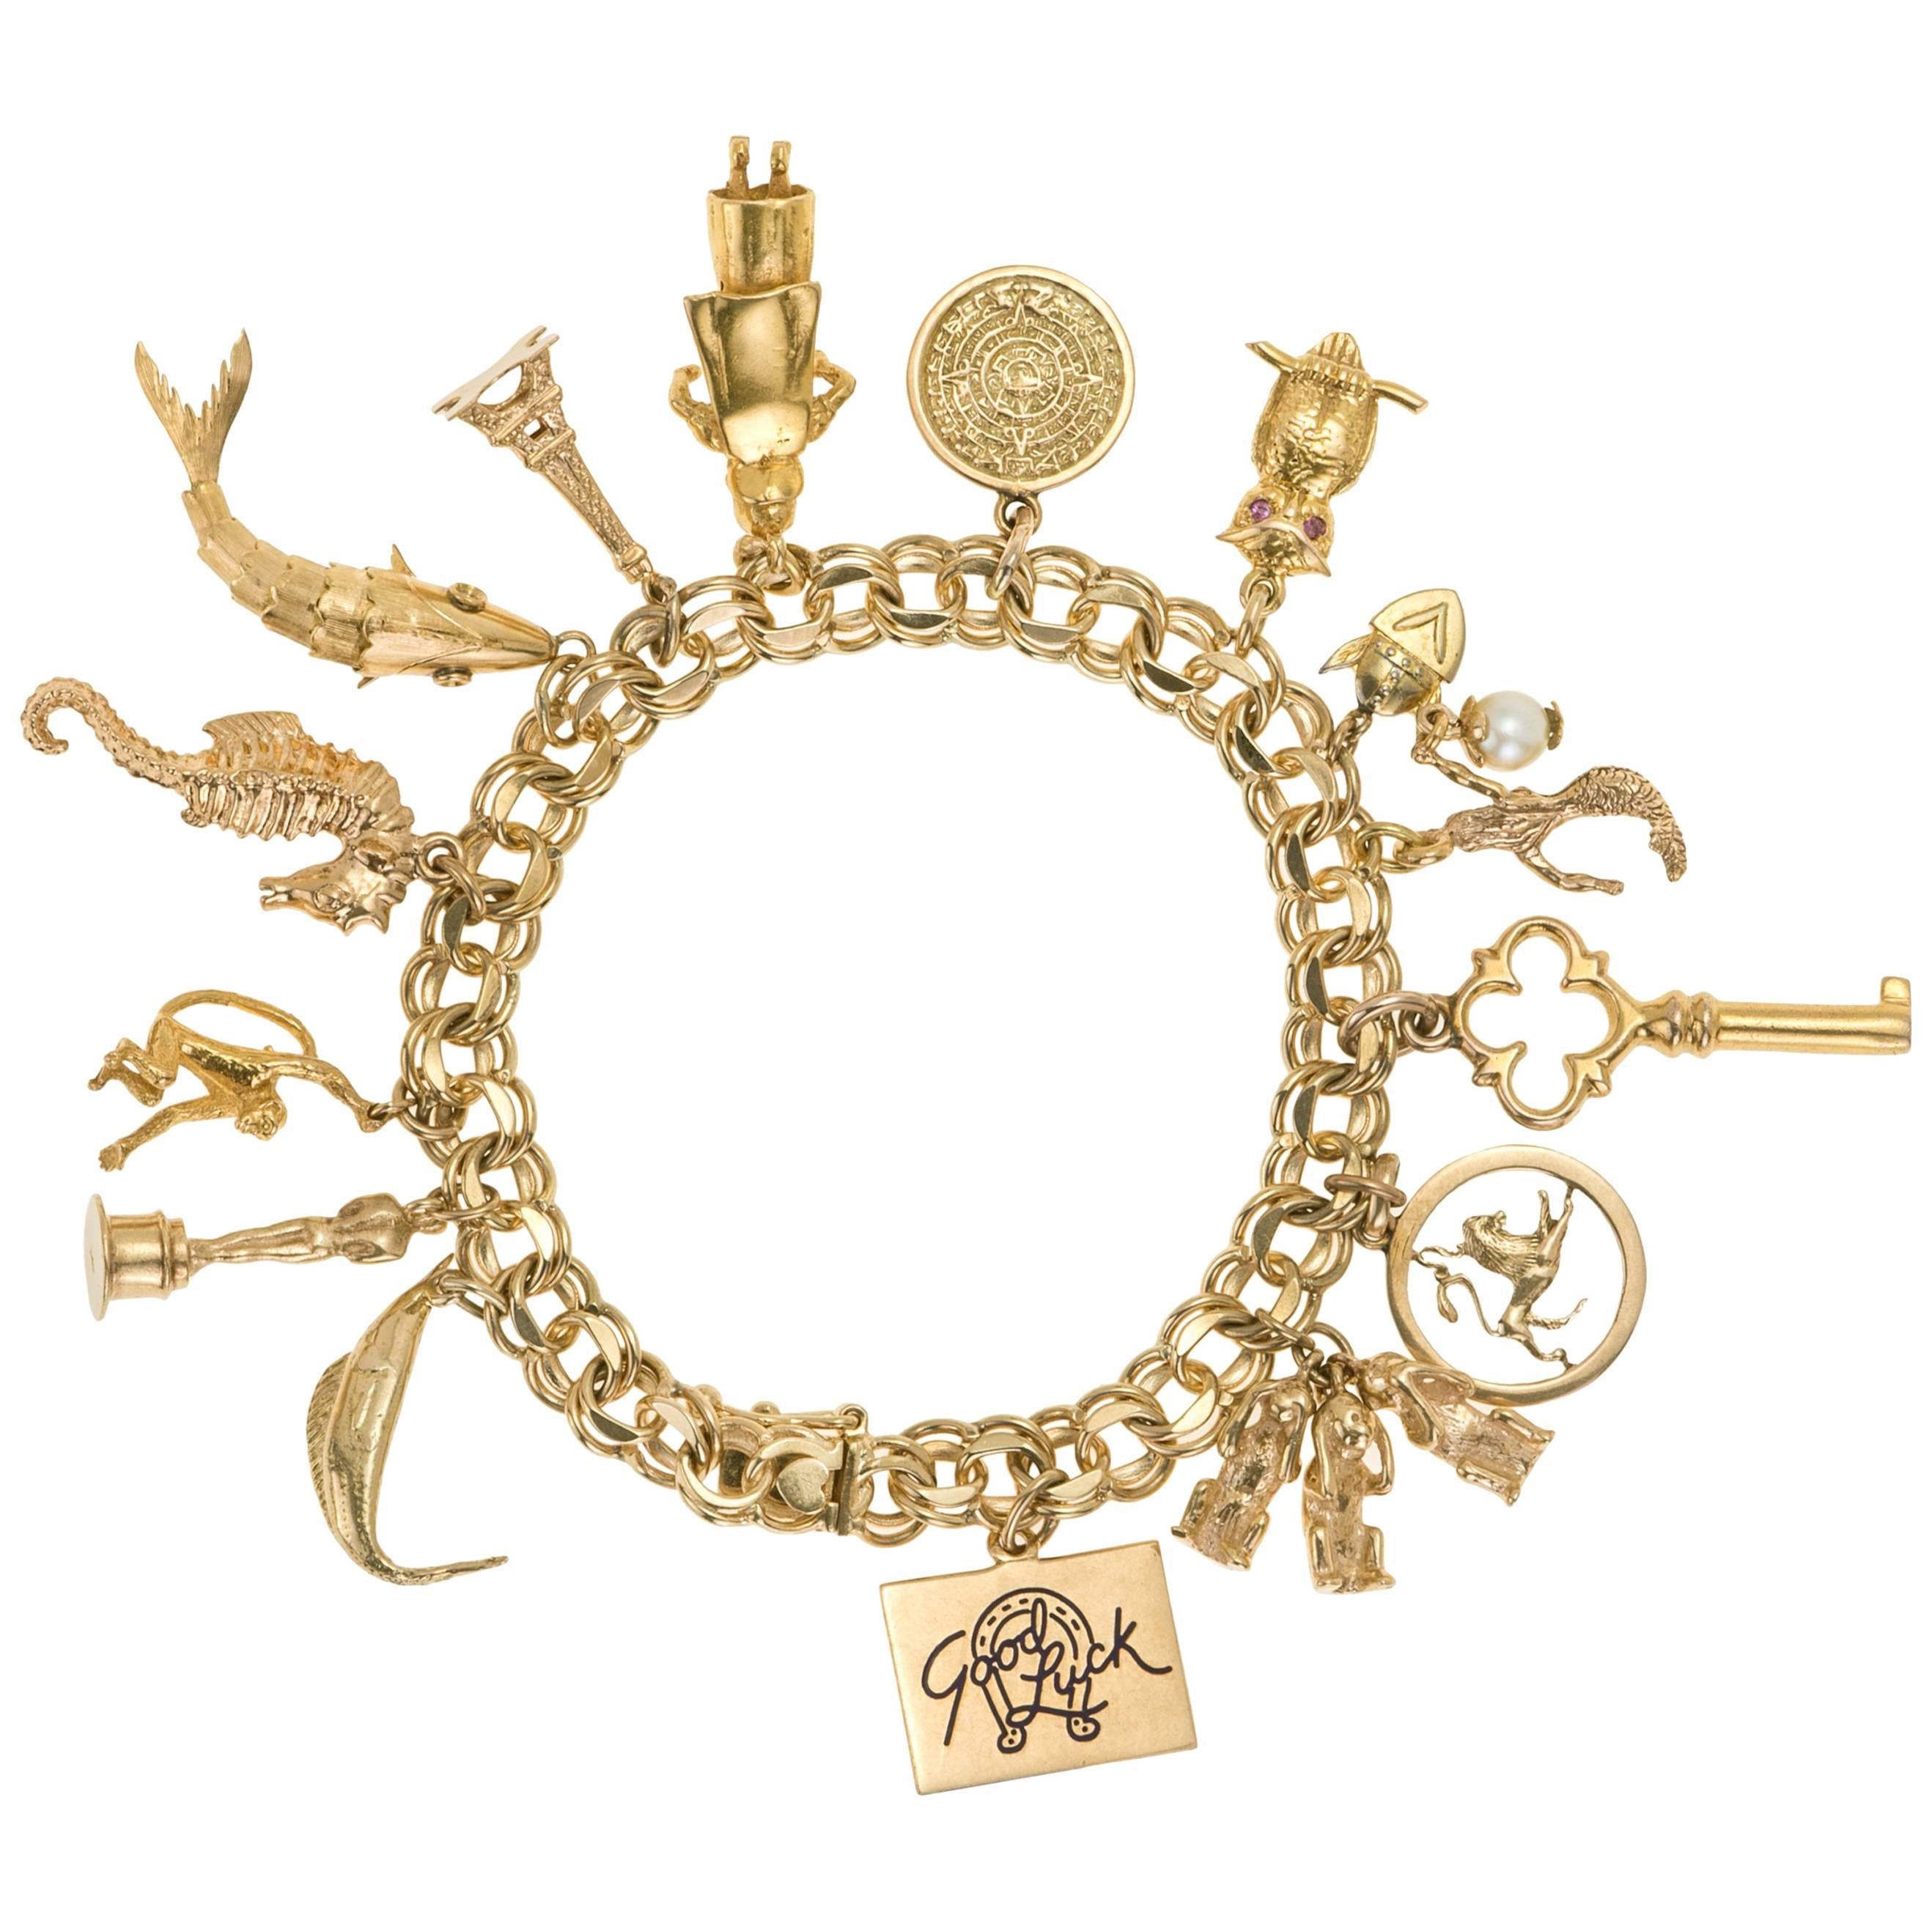 14k Yellow Gold Hobbies & Travel Keepsakes Charm Bracelet 8 1/2 Long 46.7  Grams